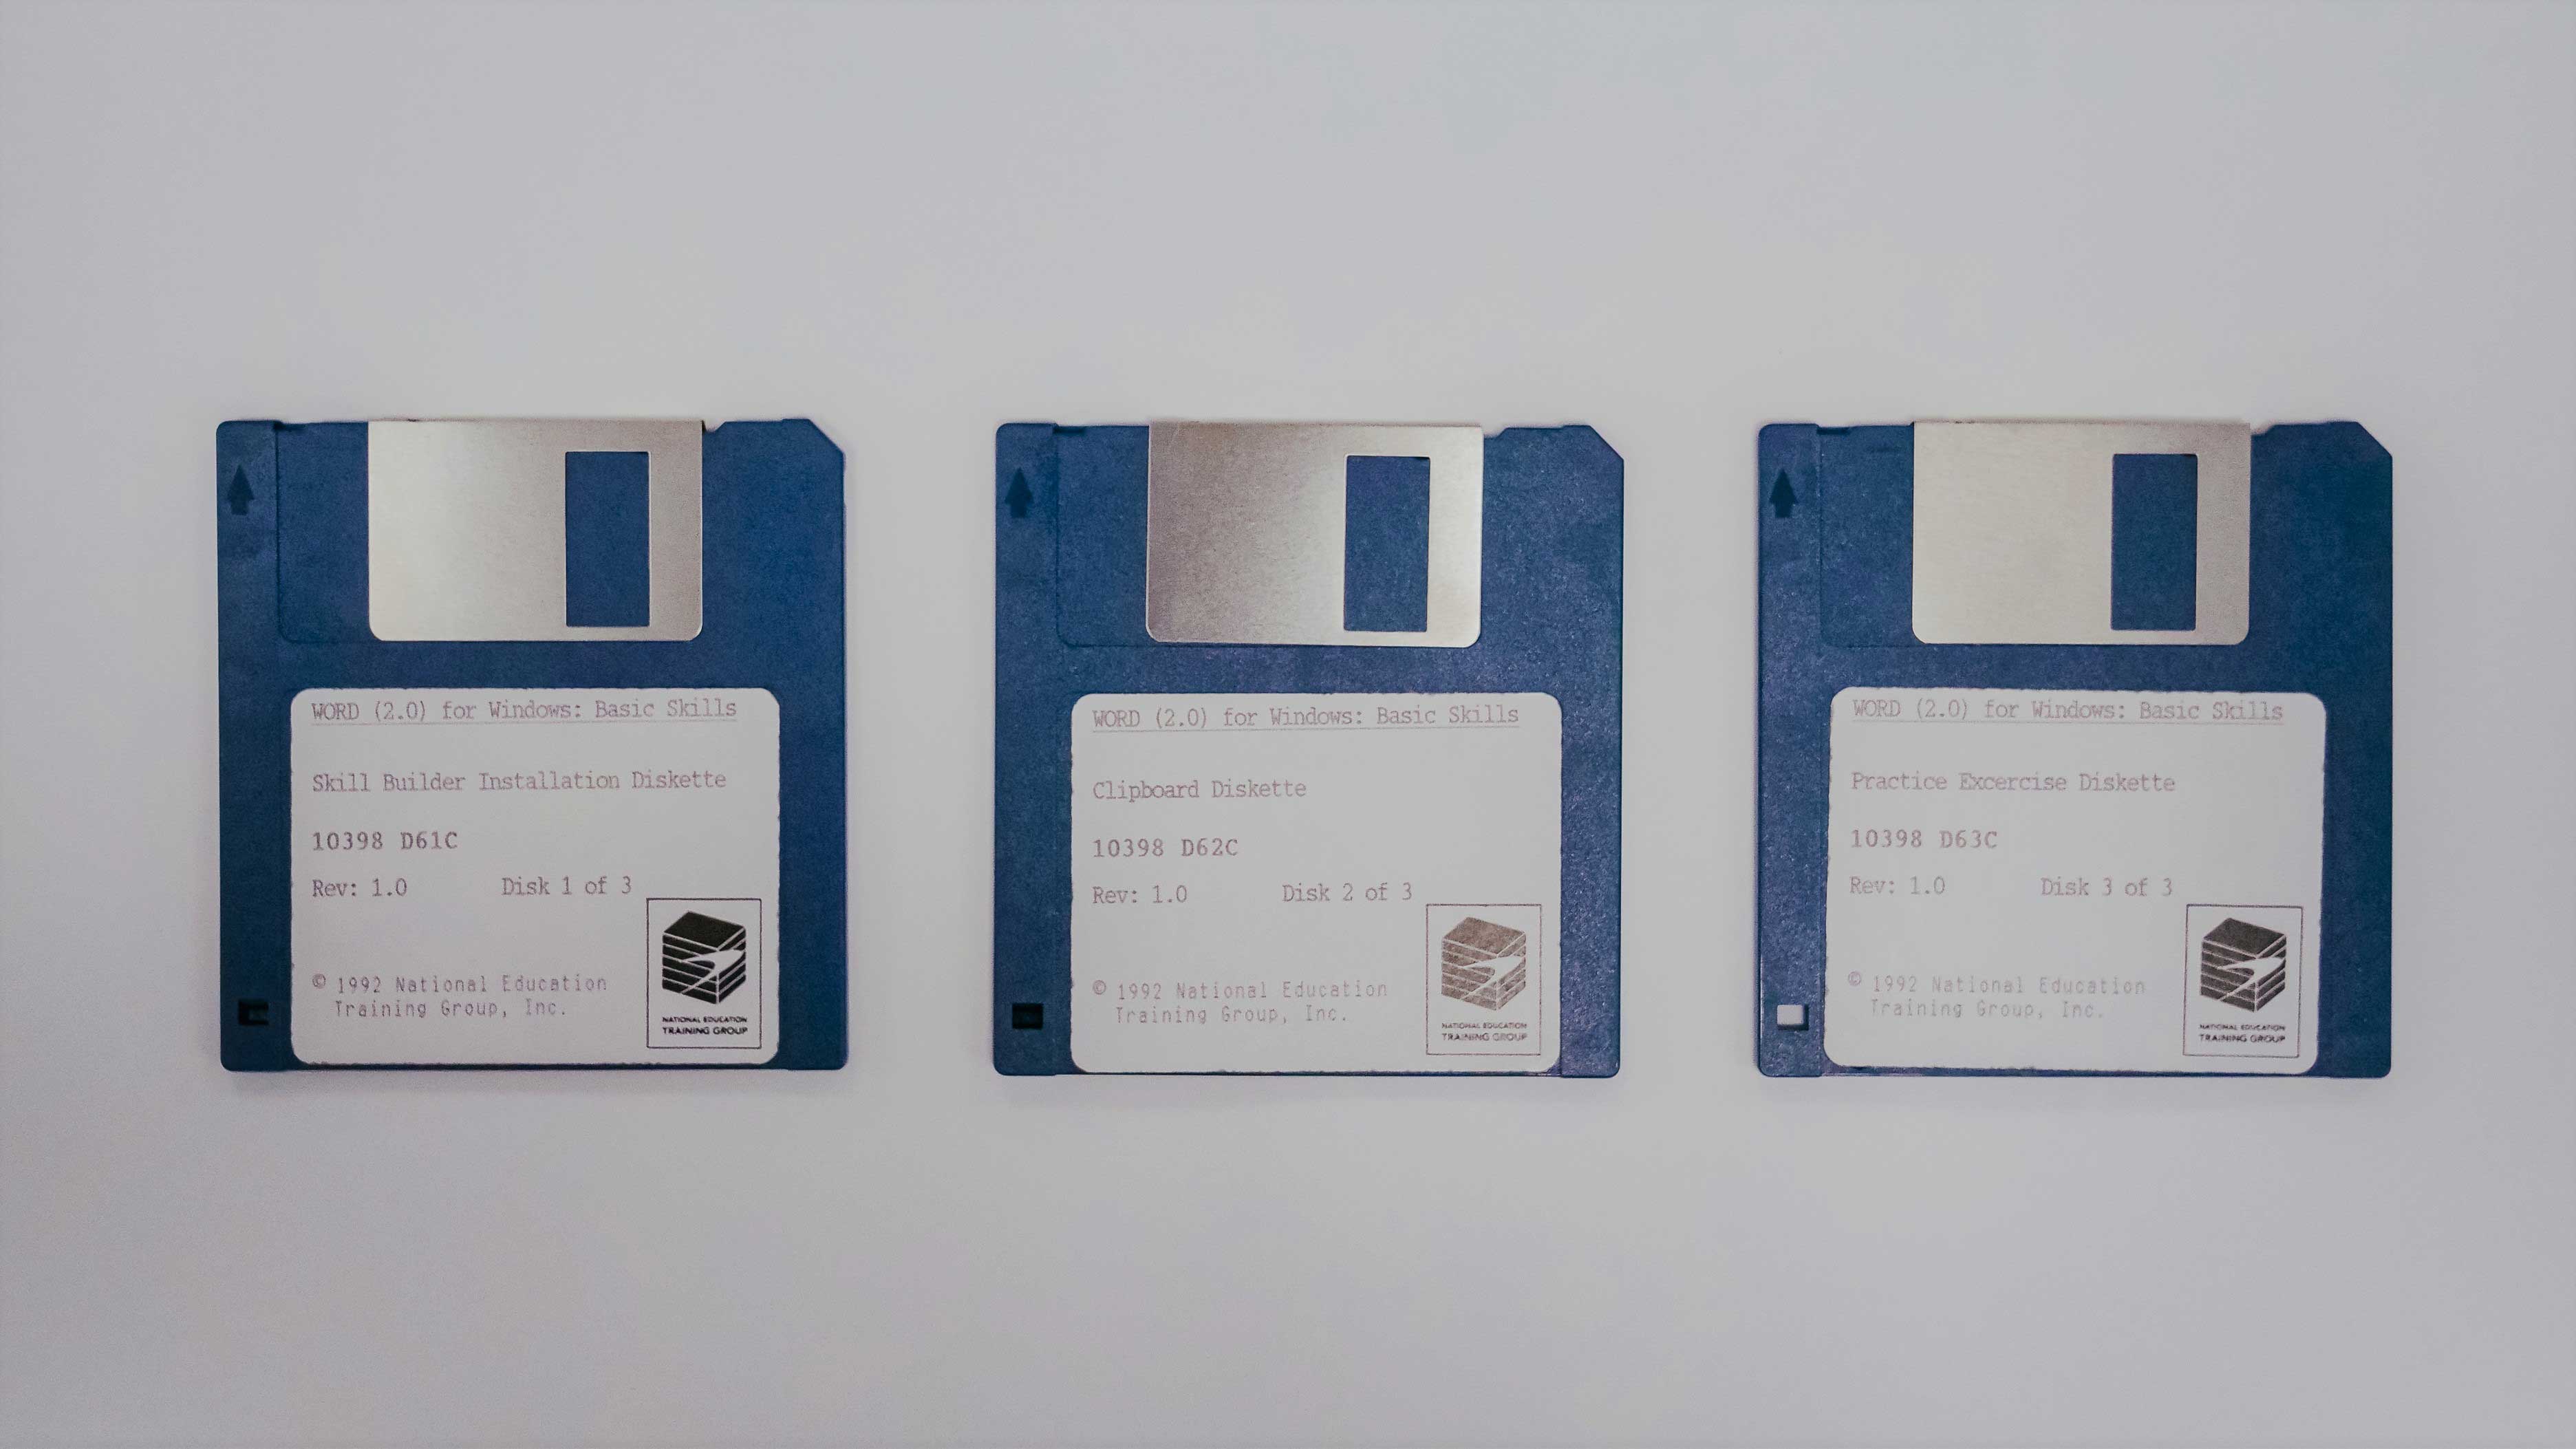 3.5 inch floppy disk - Microsoft Word (2.0) for Windows